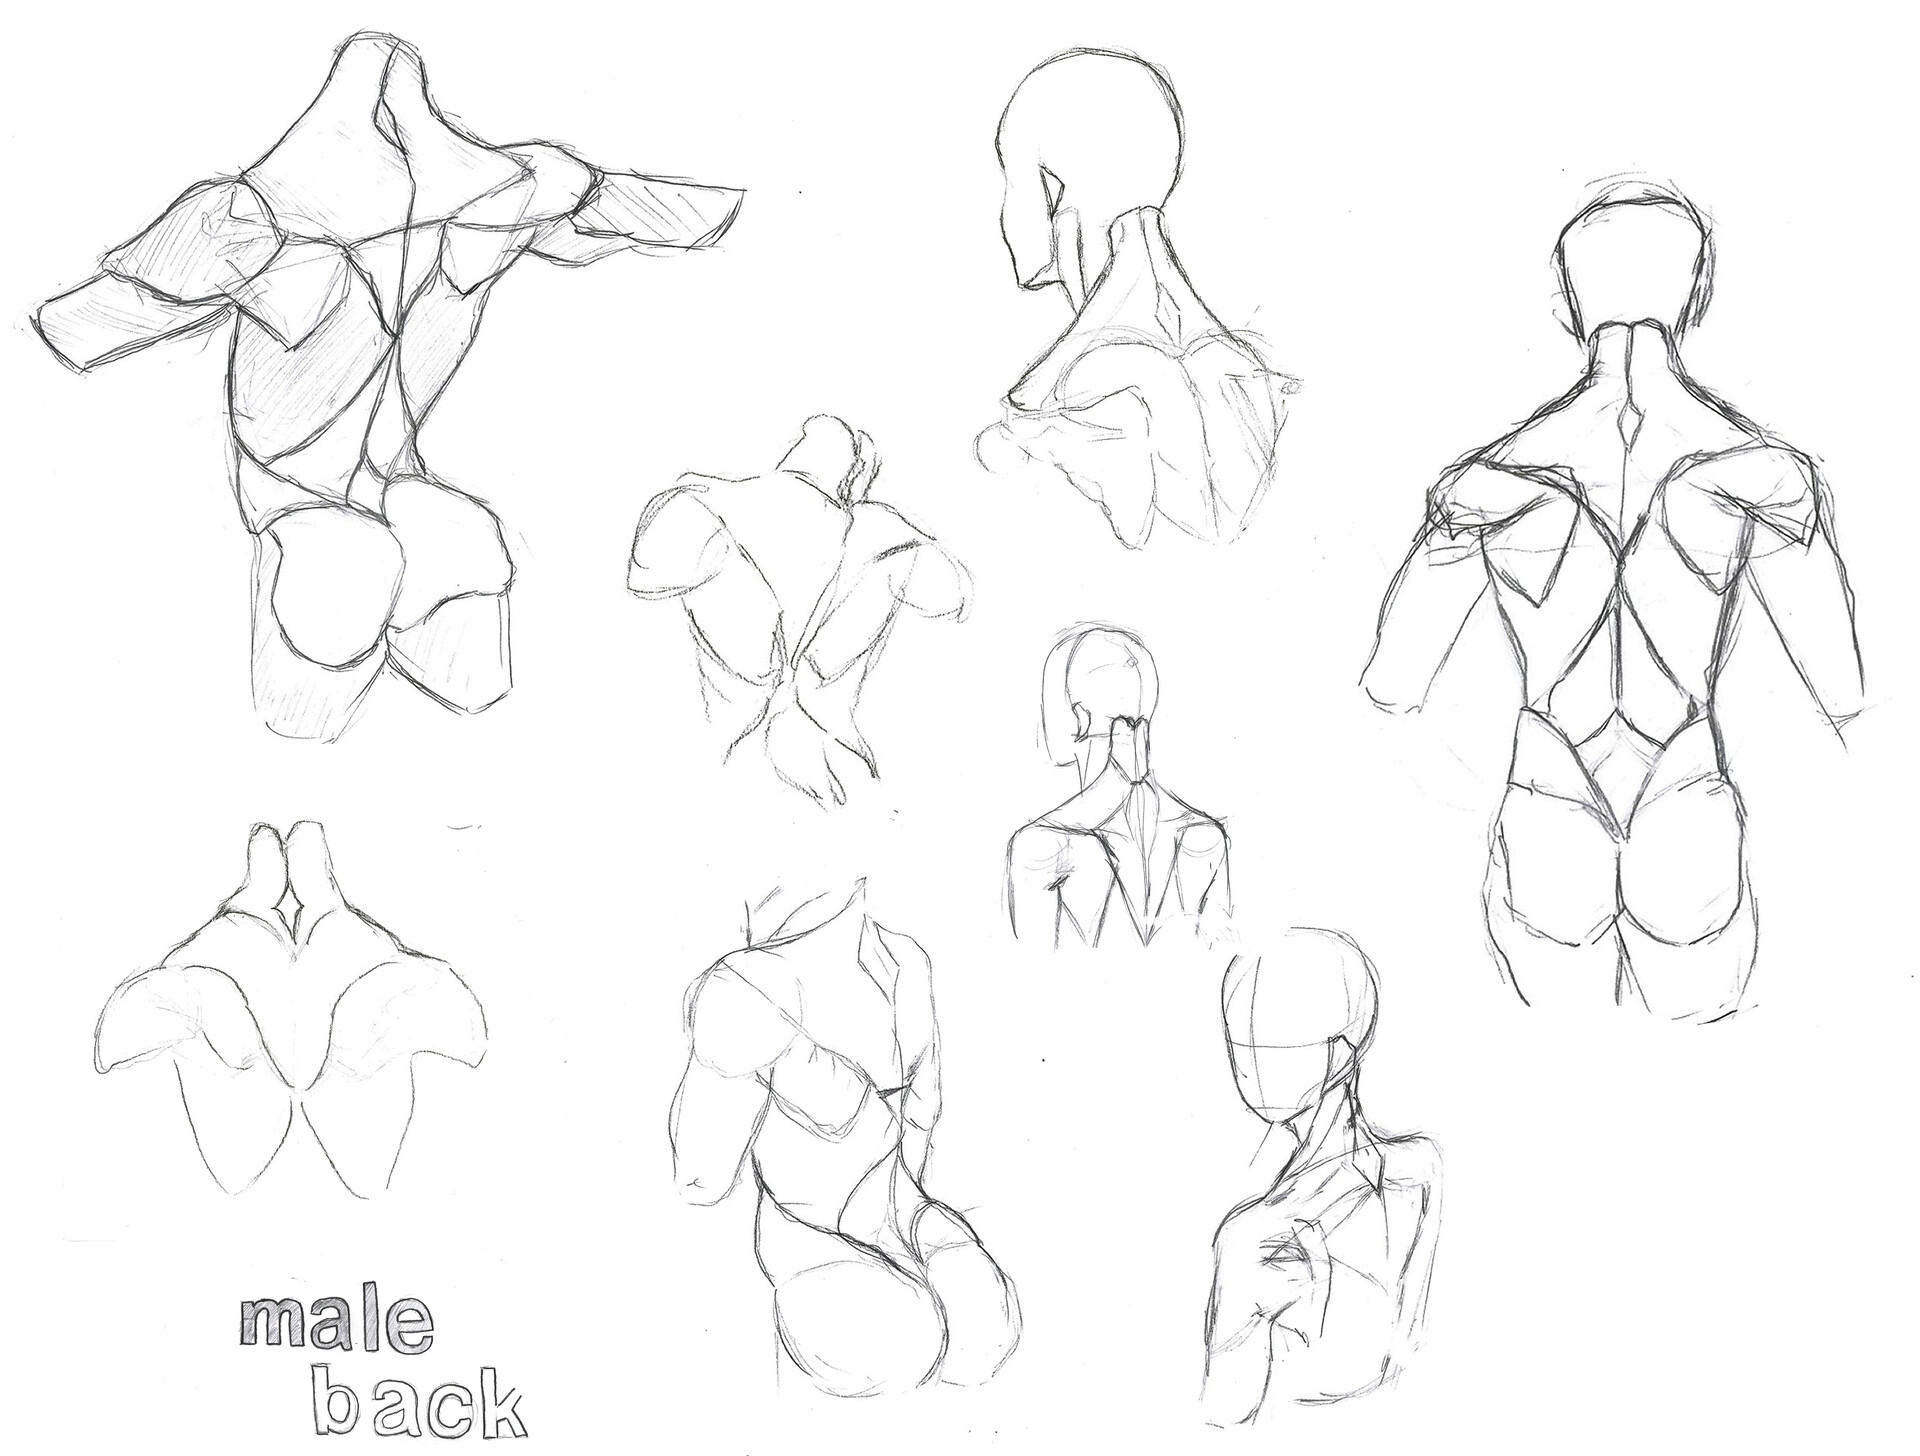 ArtStation - Male back anatomy